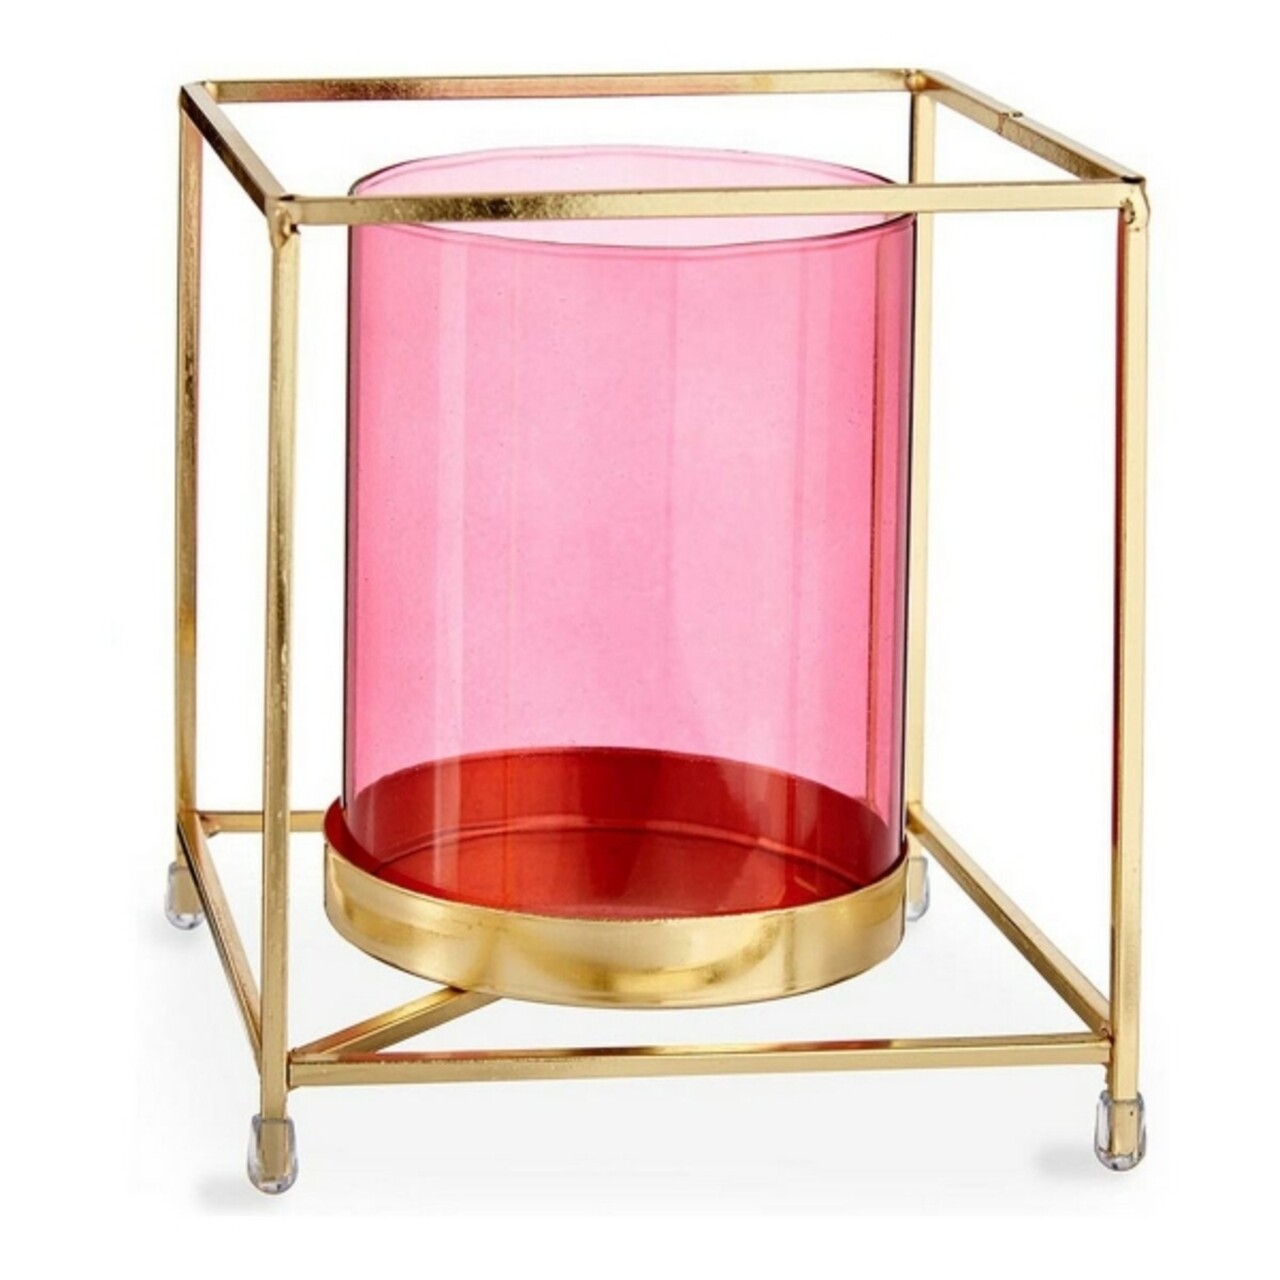 Suport pentru lumanare Squared, Gift Decor, 14 x 14 x 15.5 cm, metal/sticla, roz/auriu